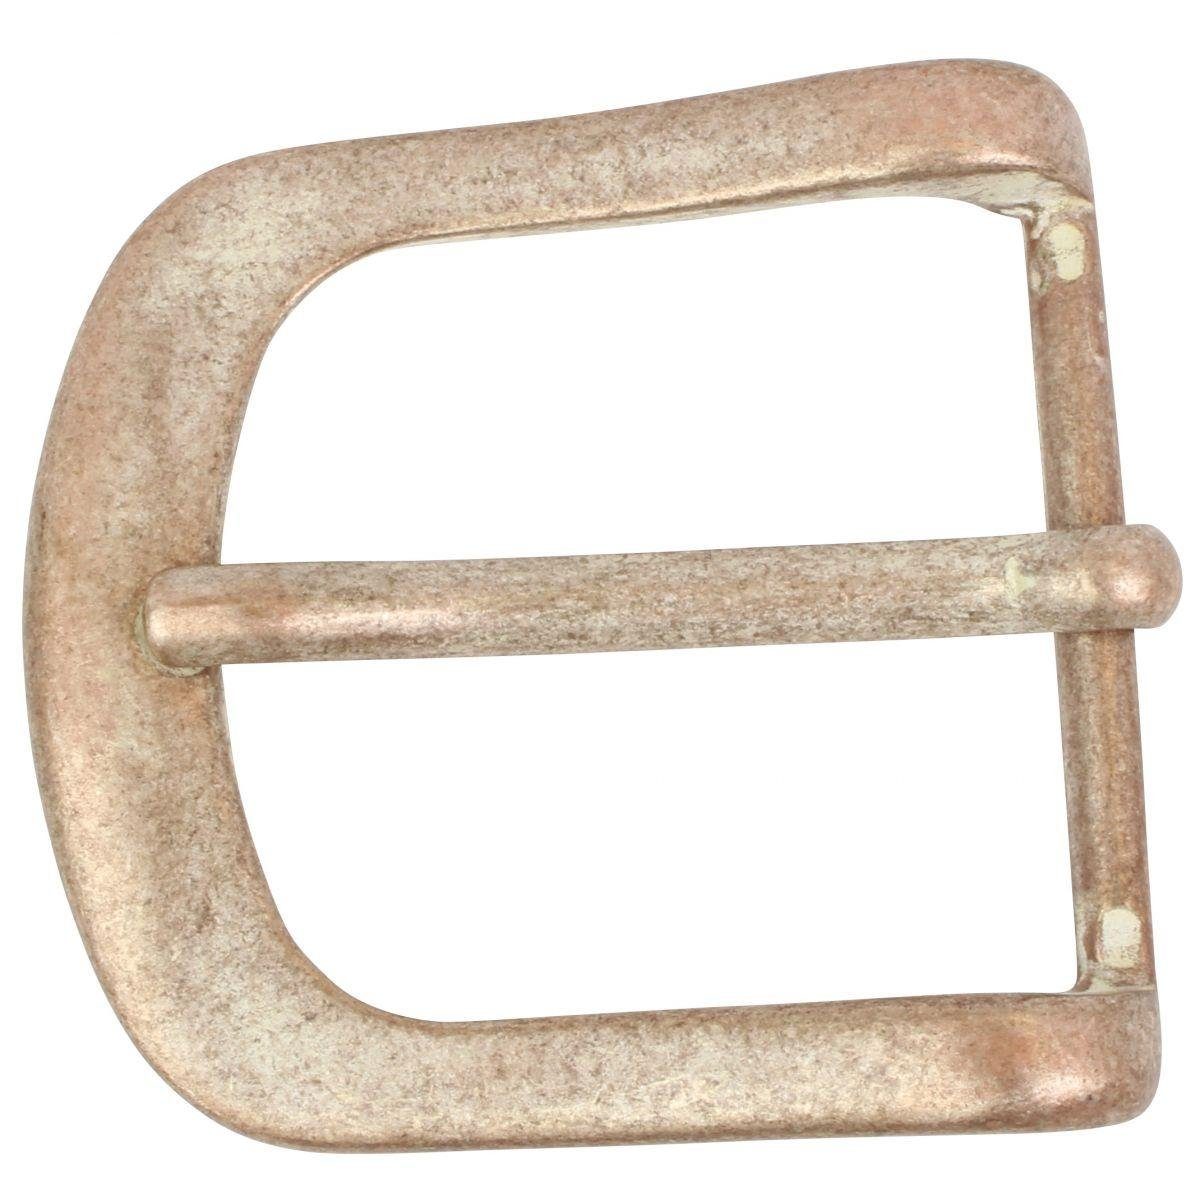 BELTINGER Gürtelschnalle 4,0 cm - Wechselschließe Gürtelschließe 40mm - Dorn-Schließe - Gürtel Rame